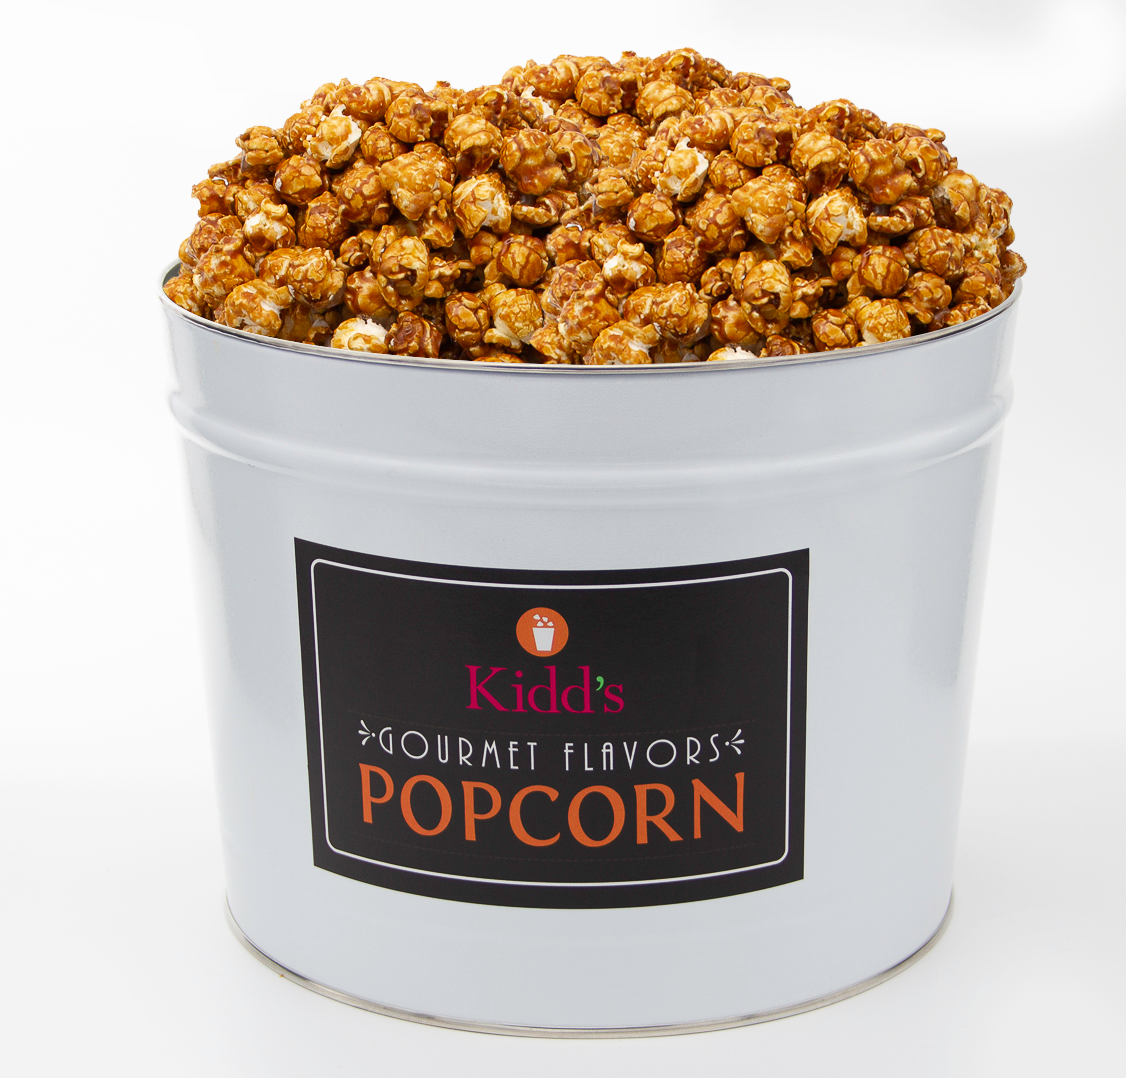 Luxury Caramel Popcorn in shippable white with black label popcorn tin.